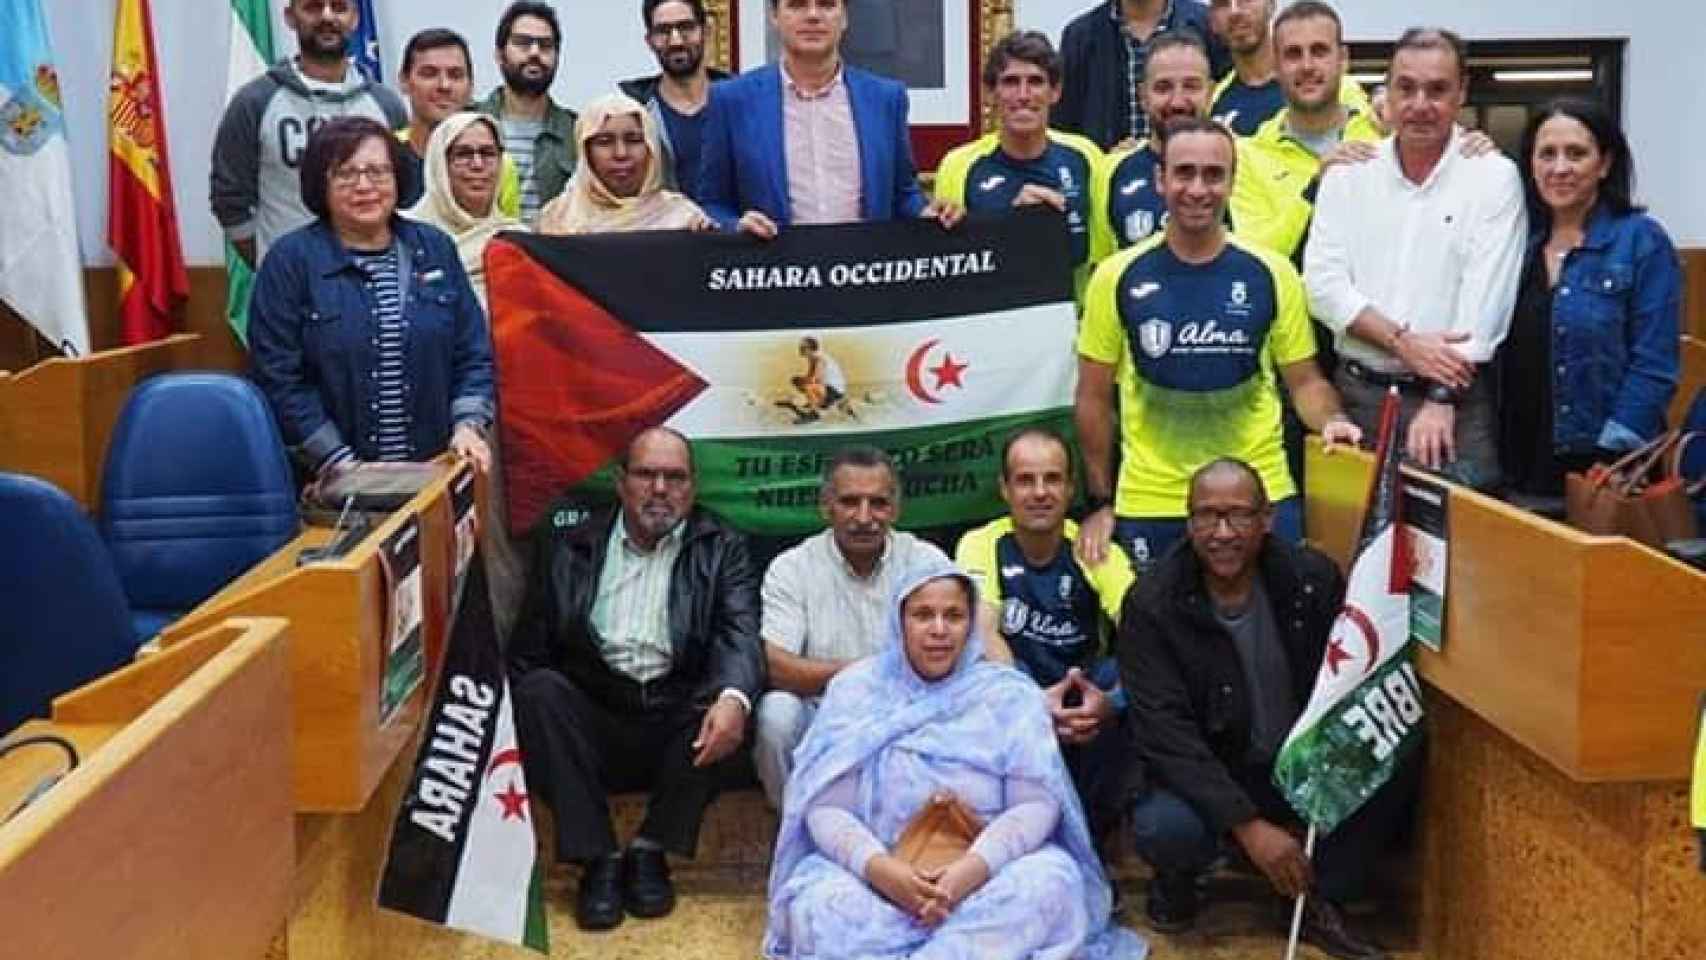 Juan Cala junto a miembros de la plataforma pro-saharaui que él lidera. Aparece el tercero por la derecha.